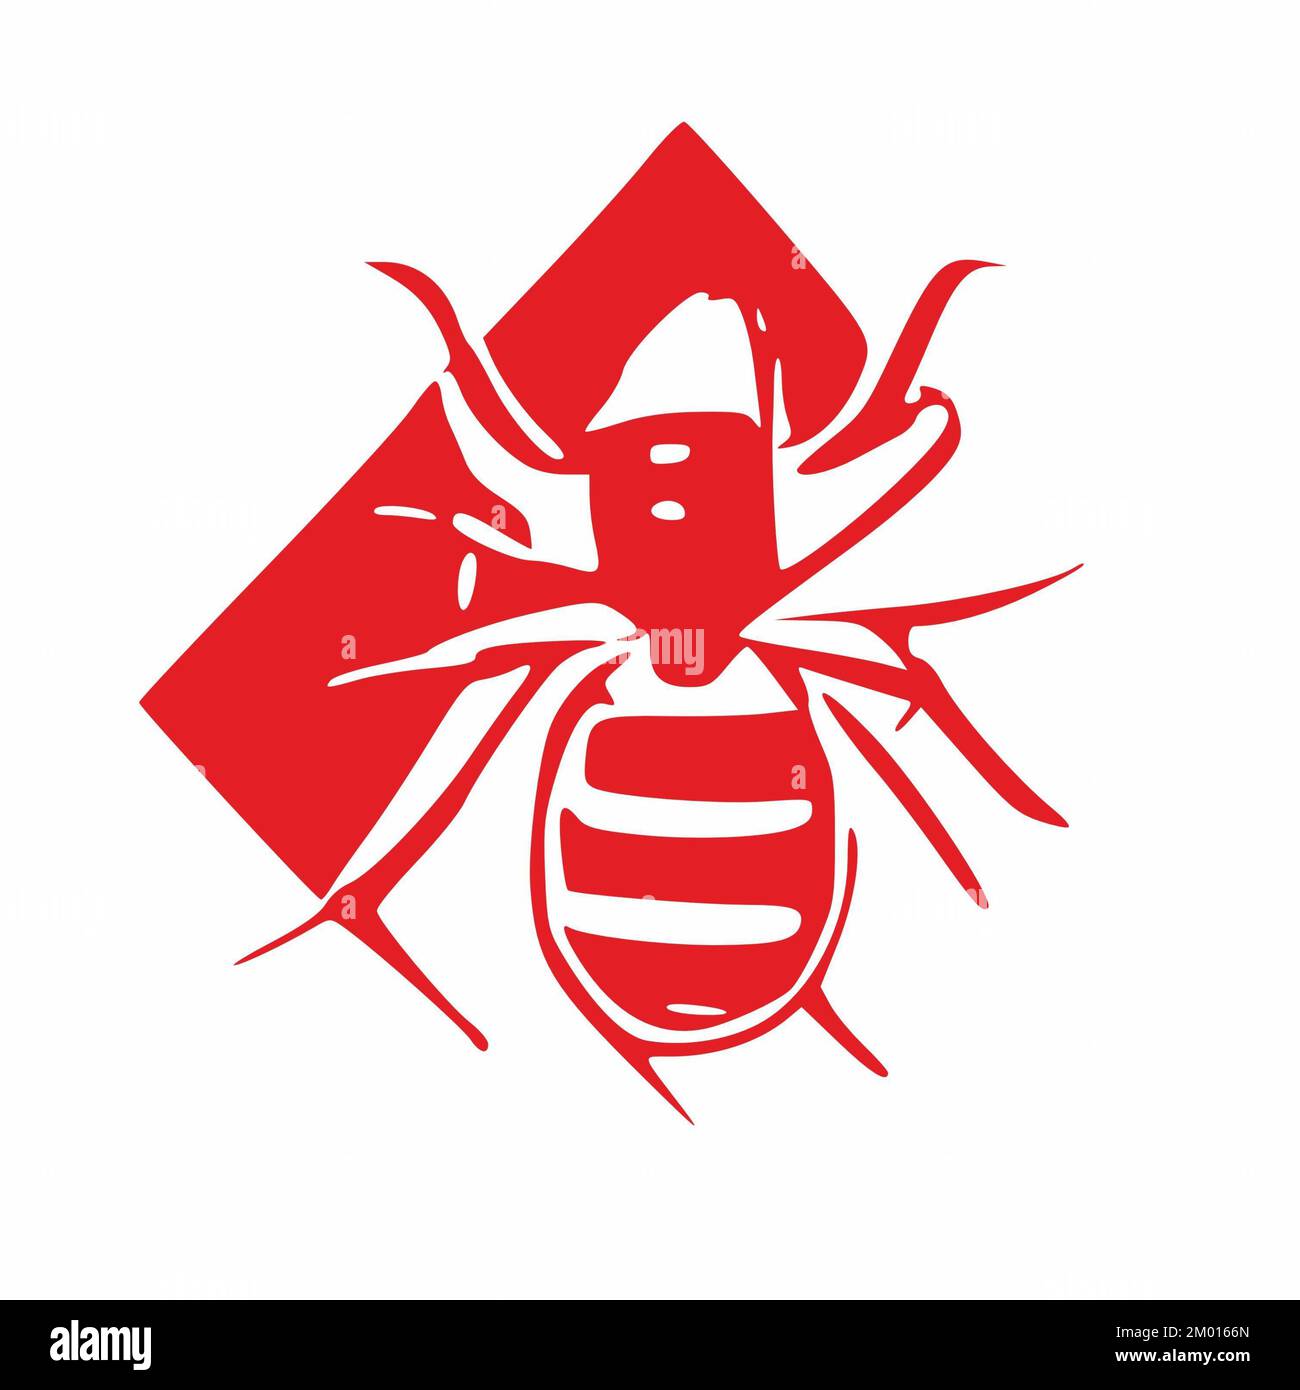 Logo de la compañía de control de plagas, Pest A el control. Foto de stock